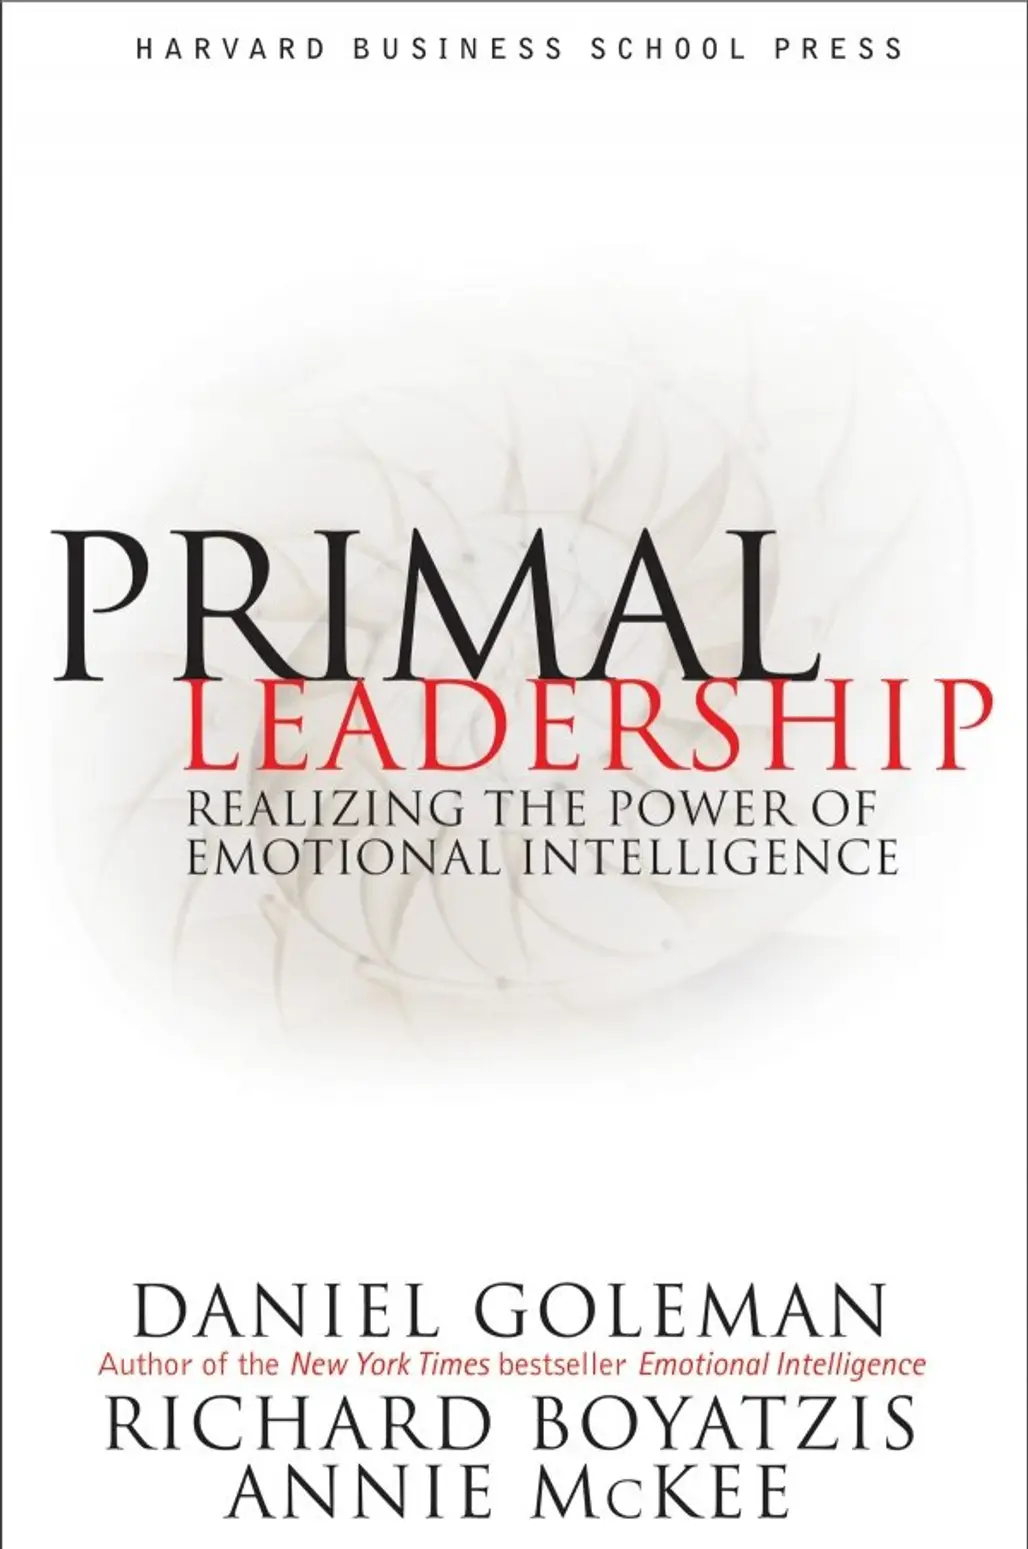 Primal Leadership - Daniel Goleman, Richard Boyatzis, and Annie McKee